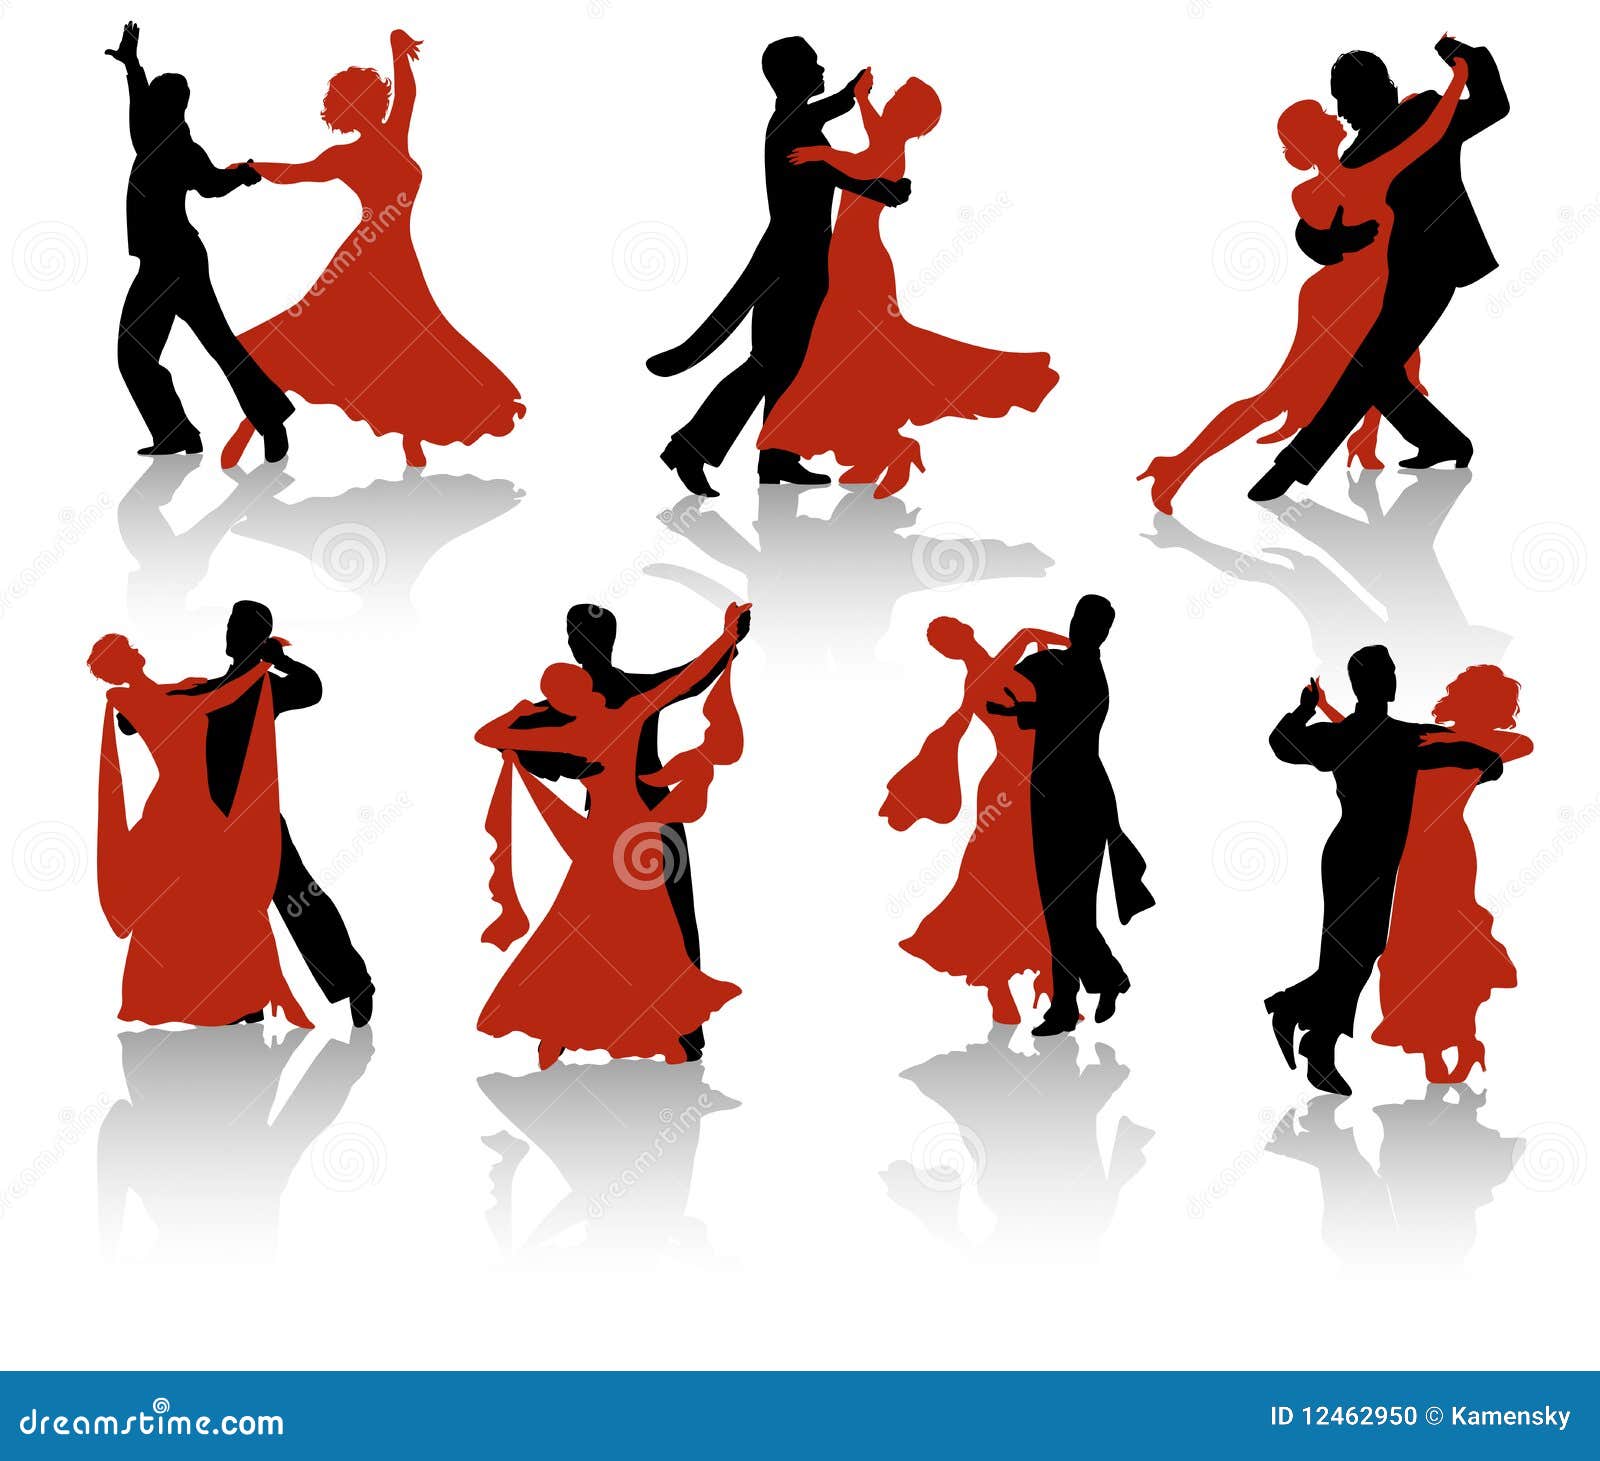 Ballroom Dancers Silhouette Stock Photo - Image: 12462950